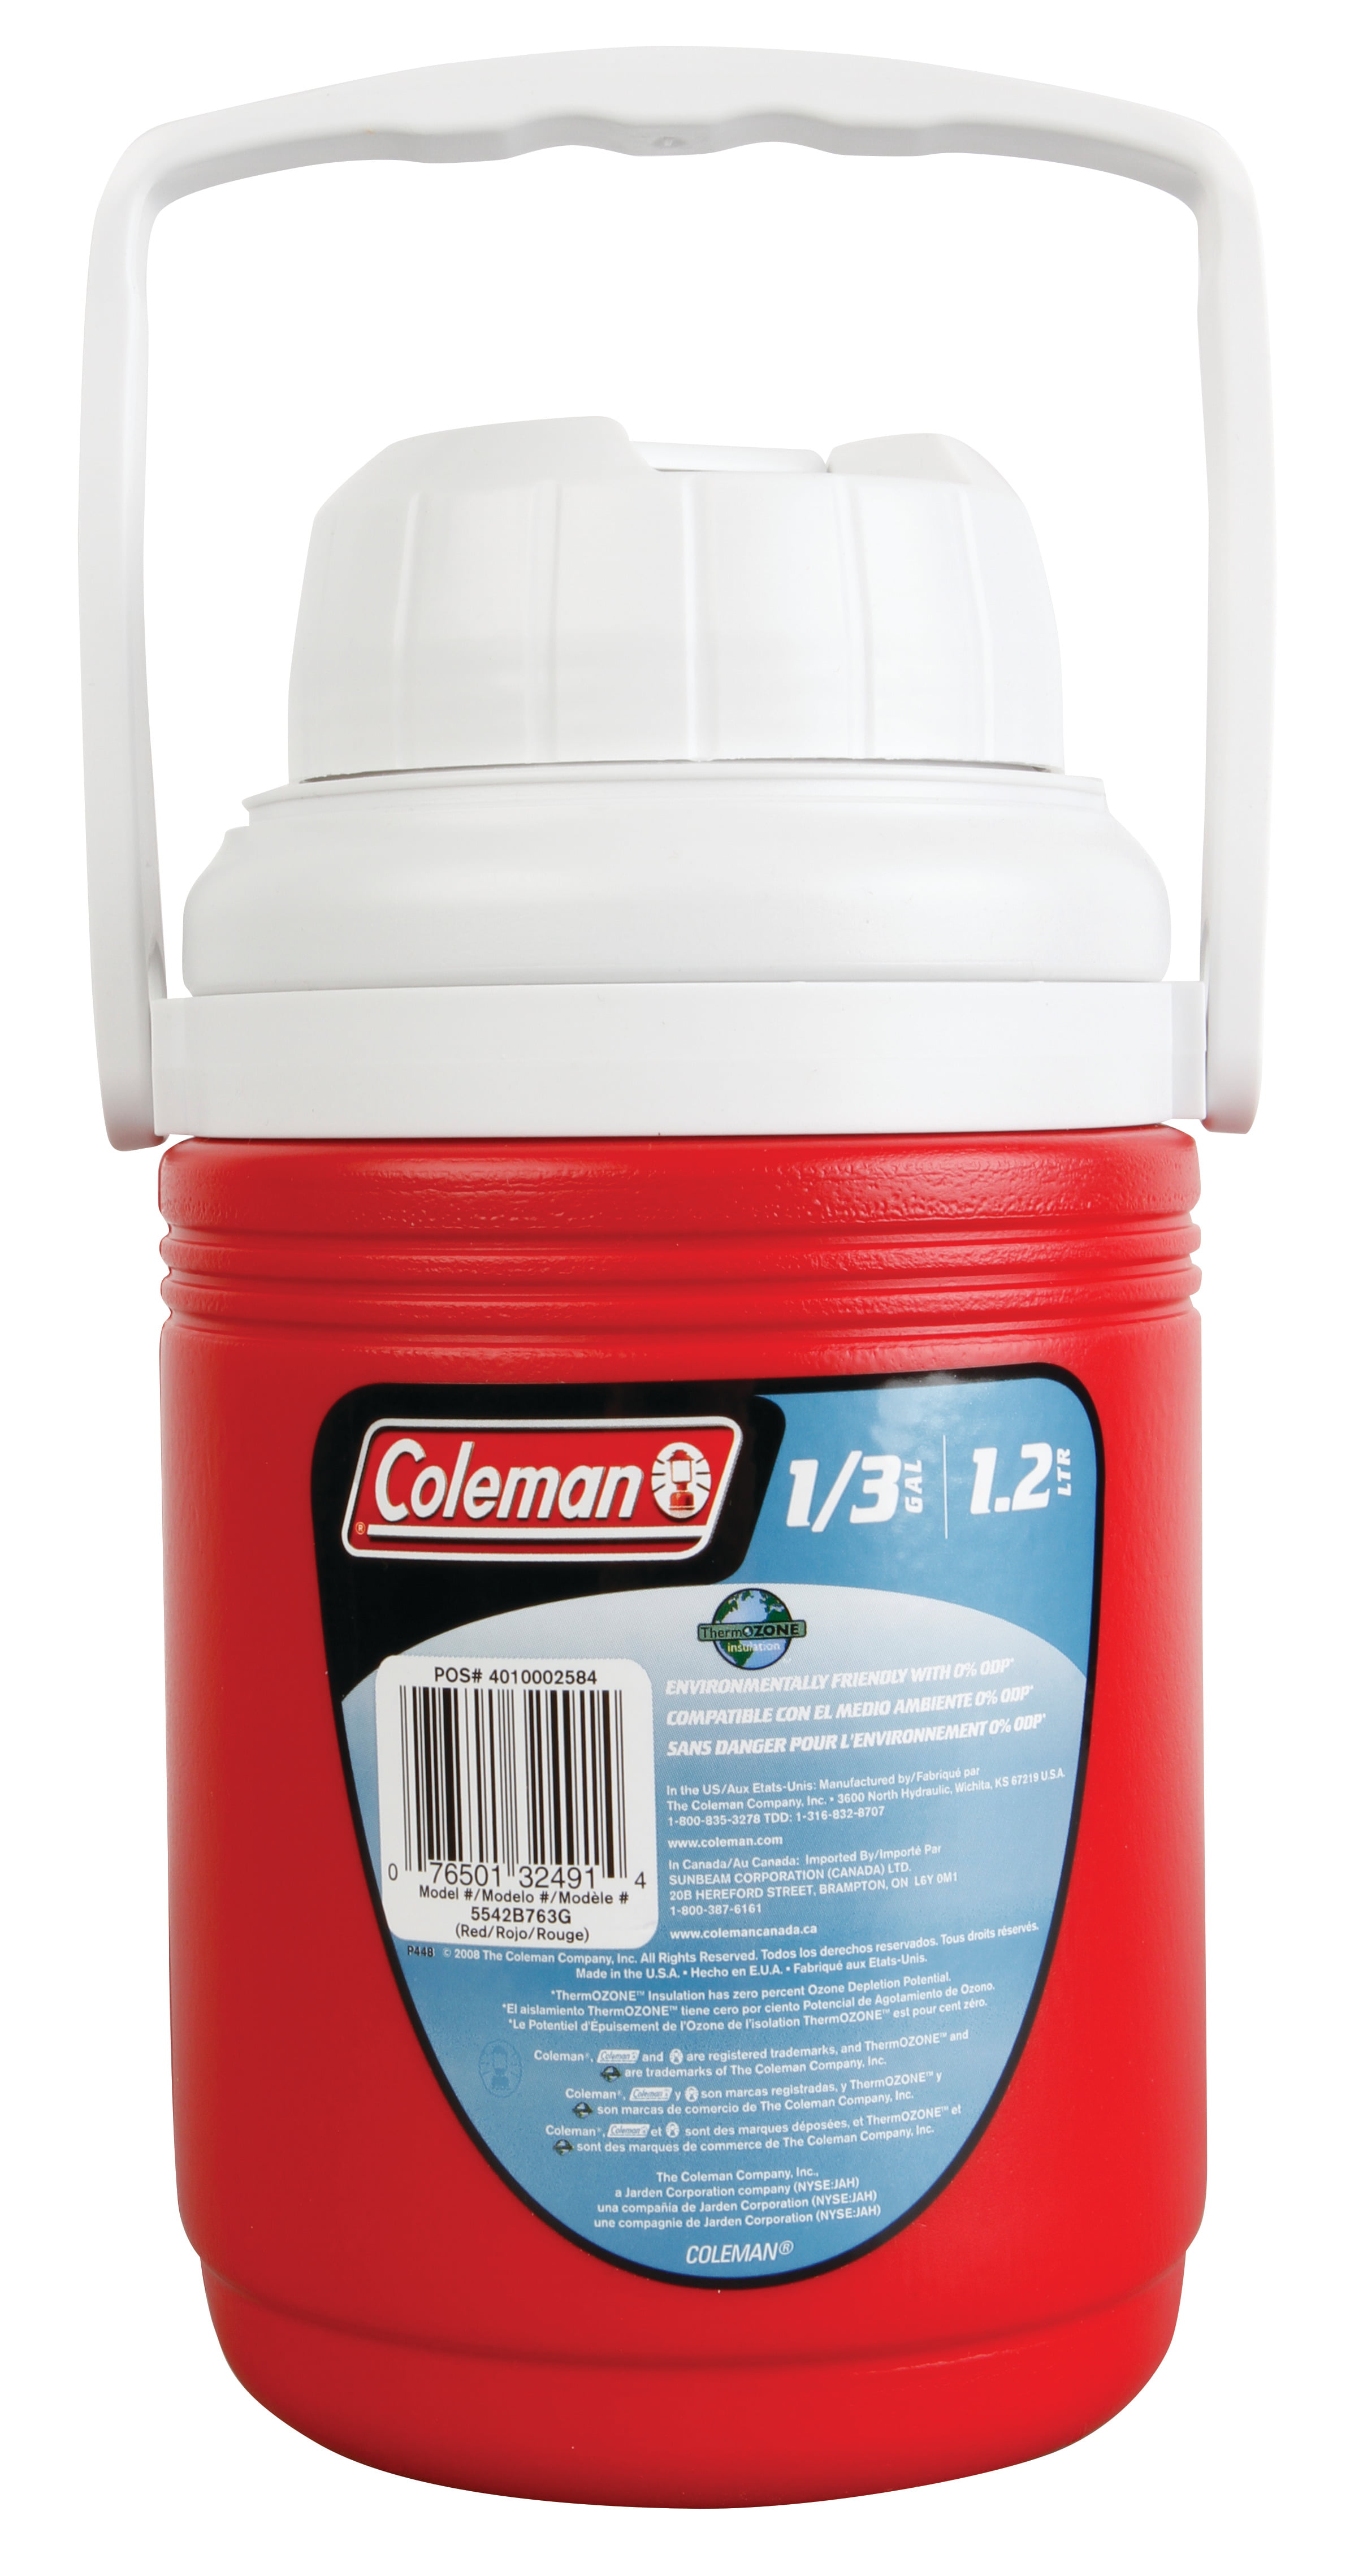 Coleman 1/3 Gallon Personal Water Jug